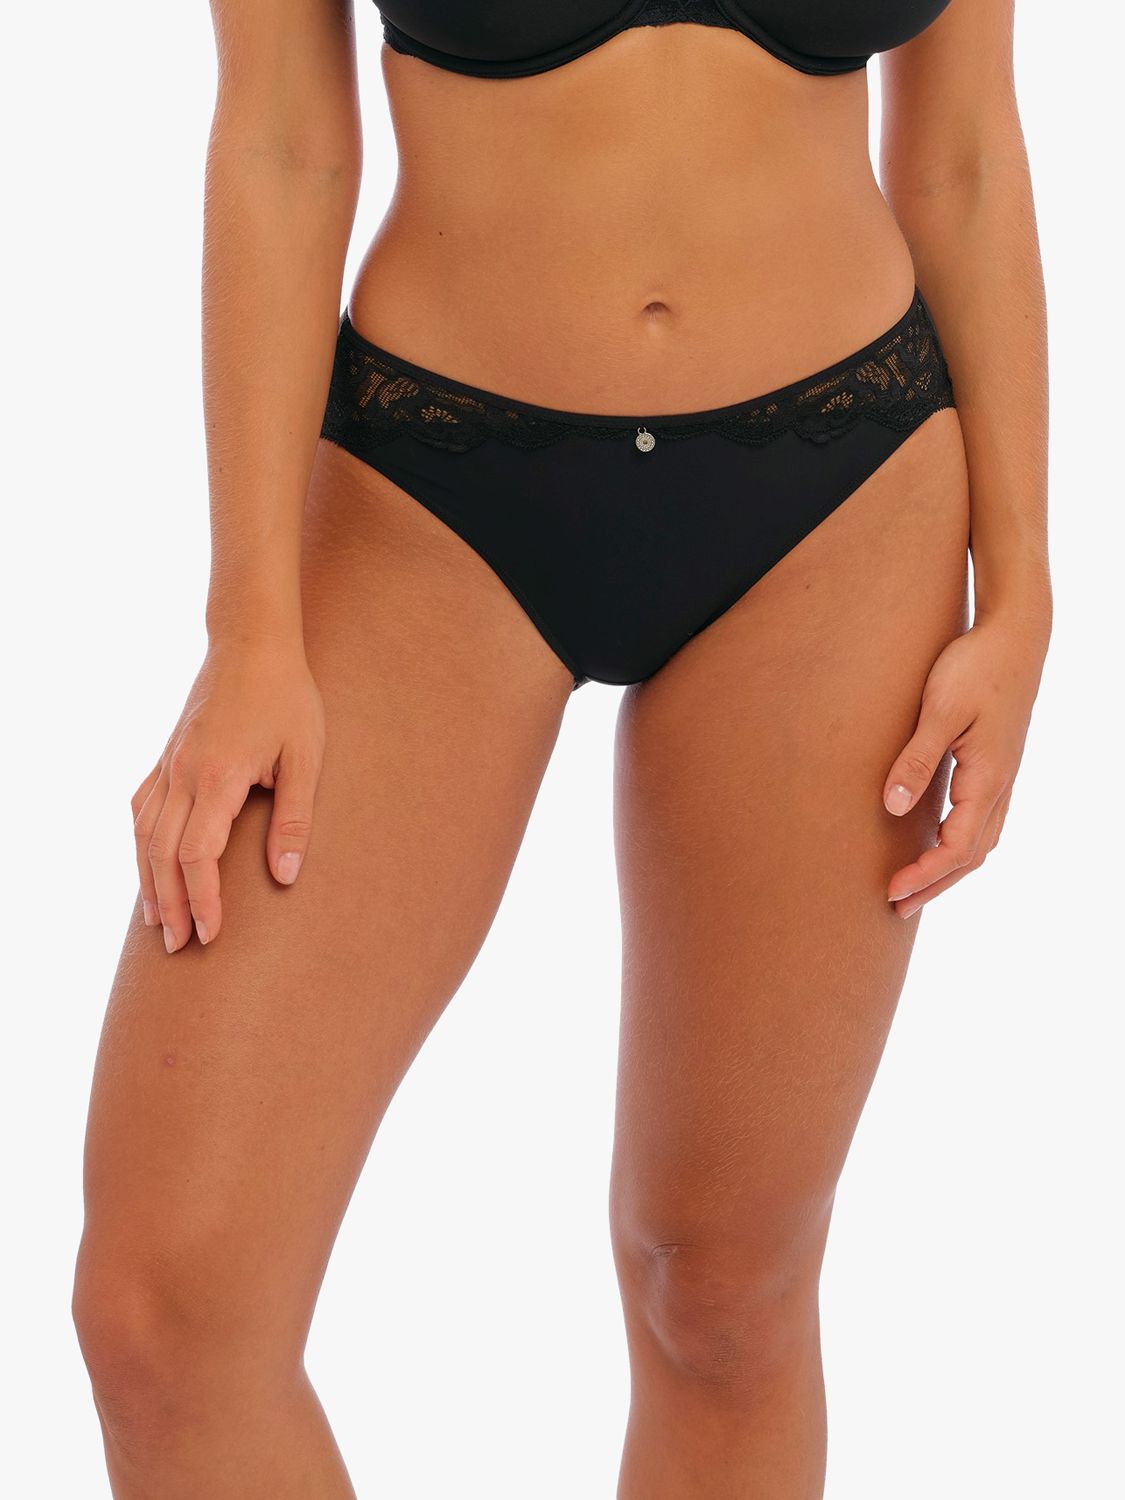 GDXFSM Women Lingerie Underwear Knickers Briefs Women Nylon